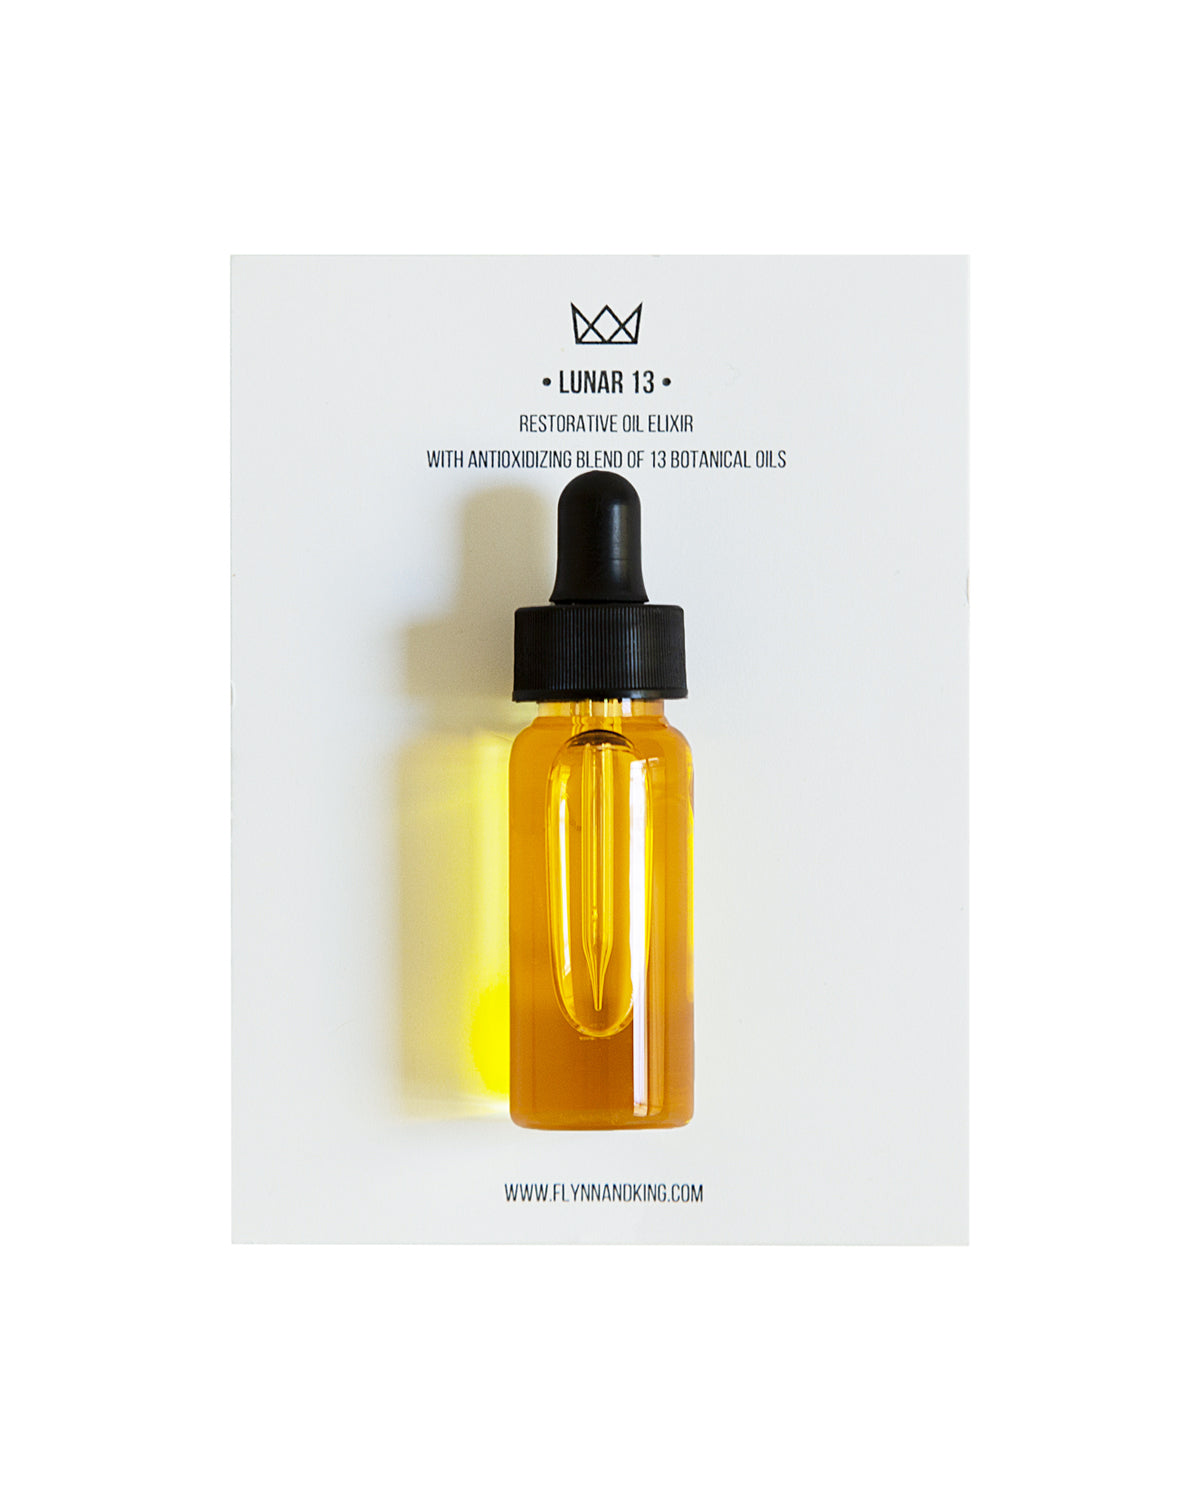 LUNAR 13 - Restorative Oil Serum with an Antioxidizing Blend of 13 Botanical Oils